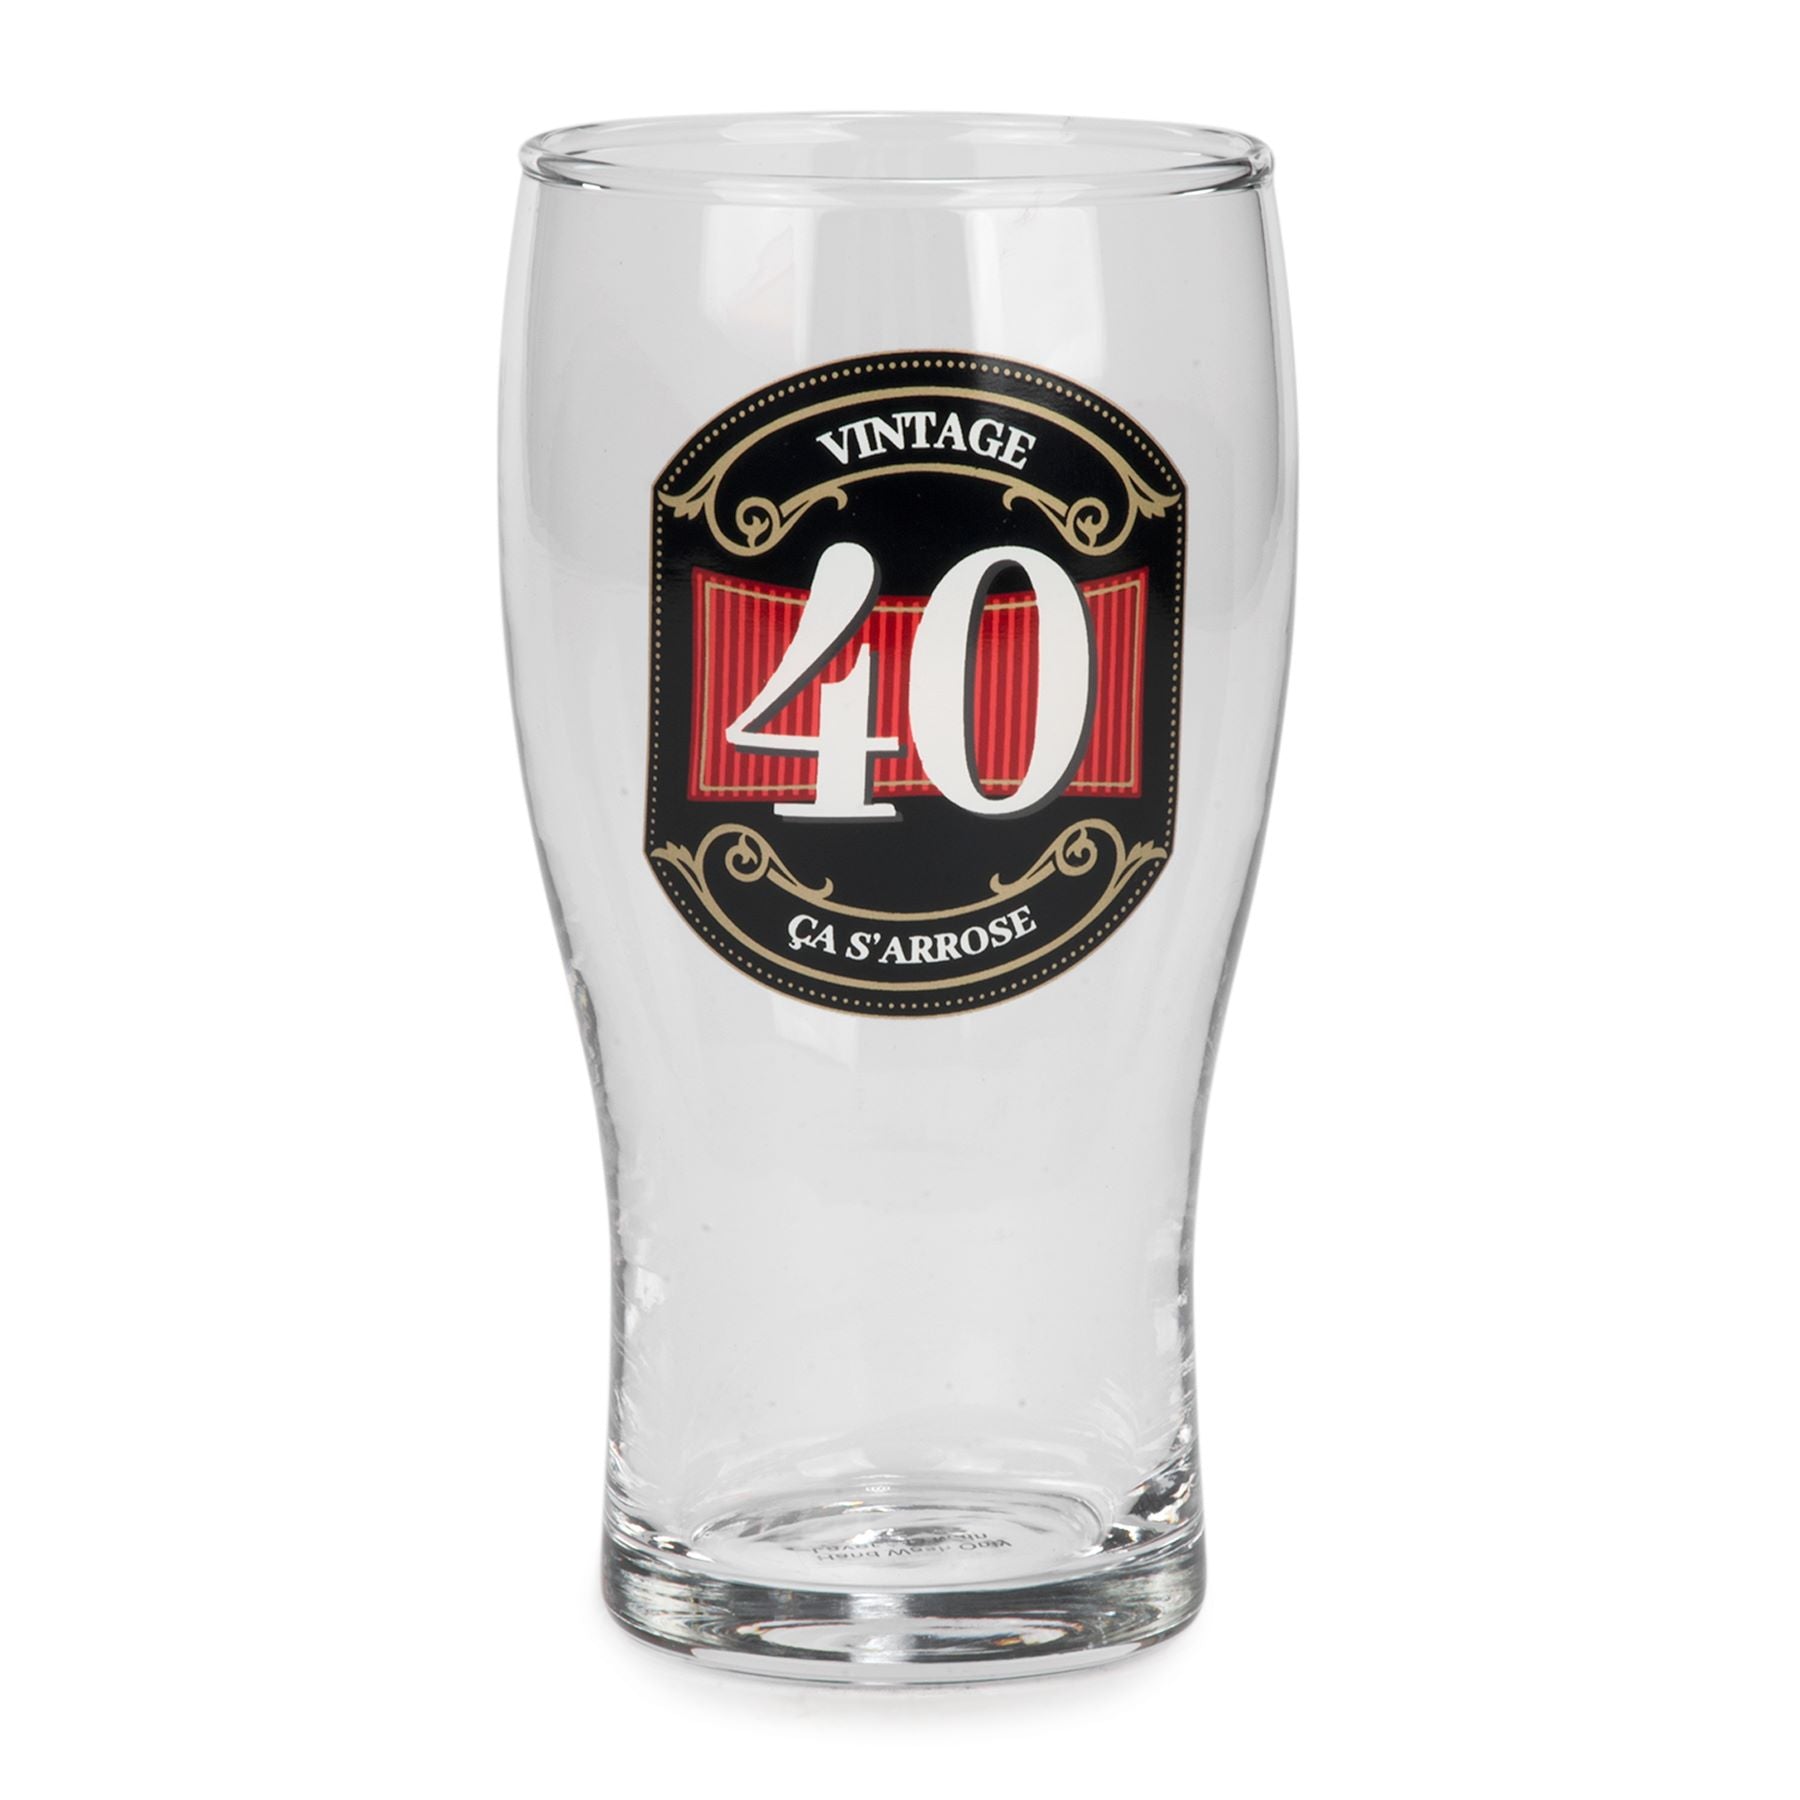 Beer Glass - Vintage 40 3x6in